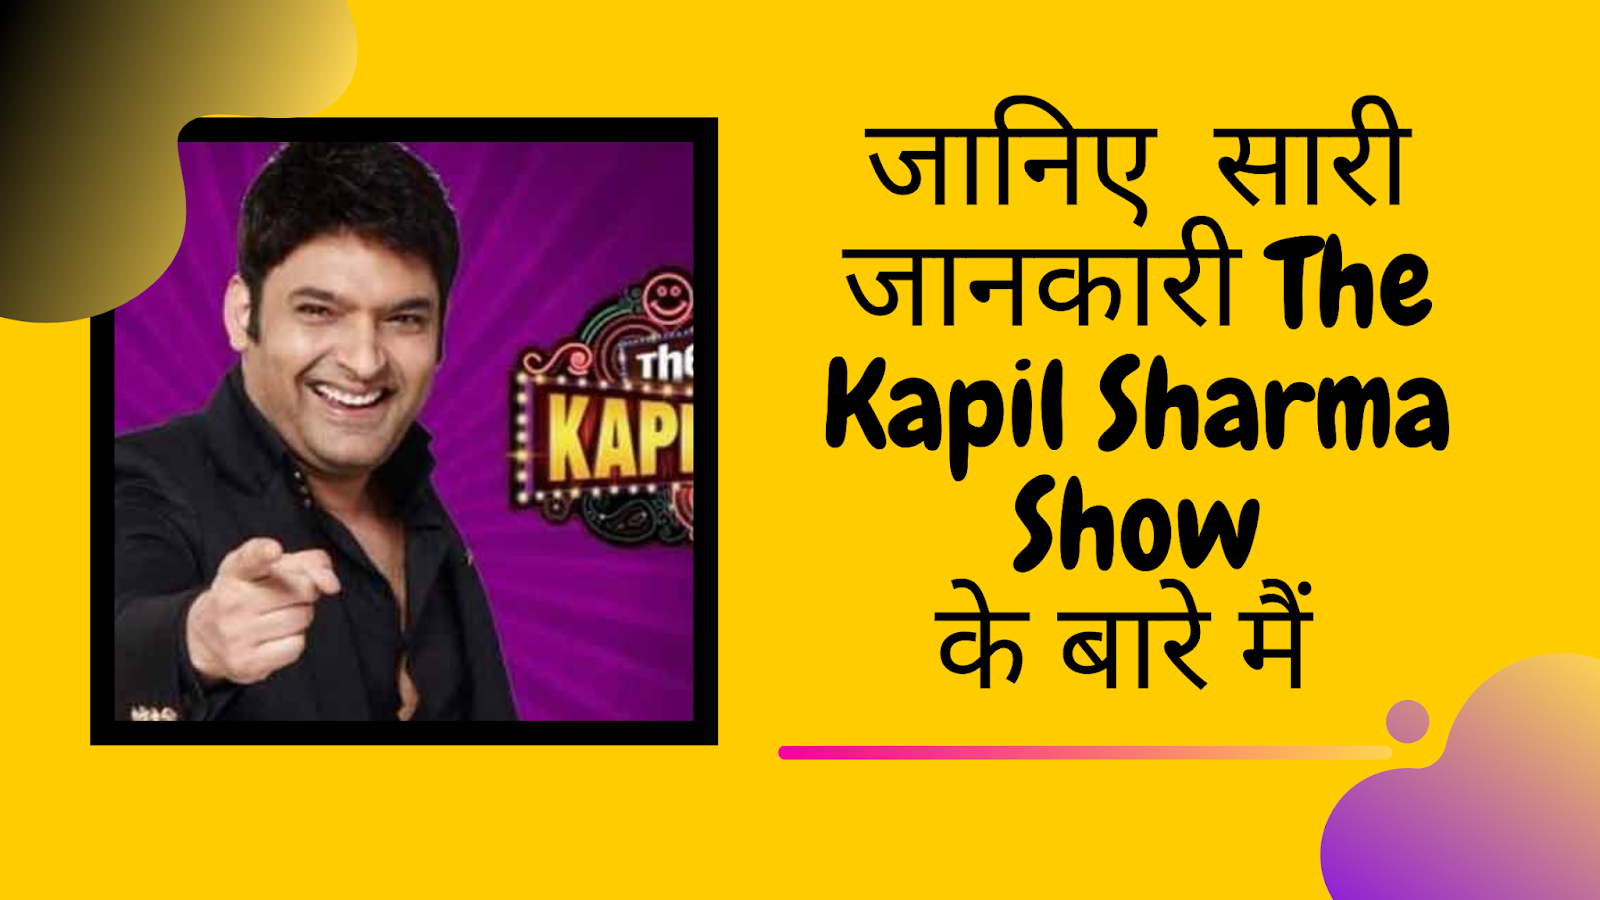 Kapil Sharma Show Me Kaise Jaye,  Ticket Price, Actors Real Name, Income & More